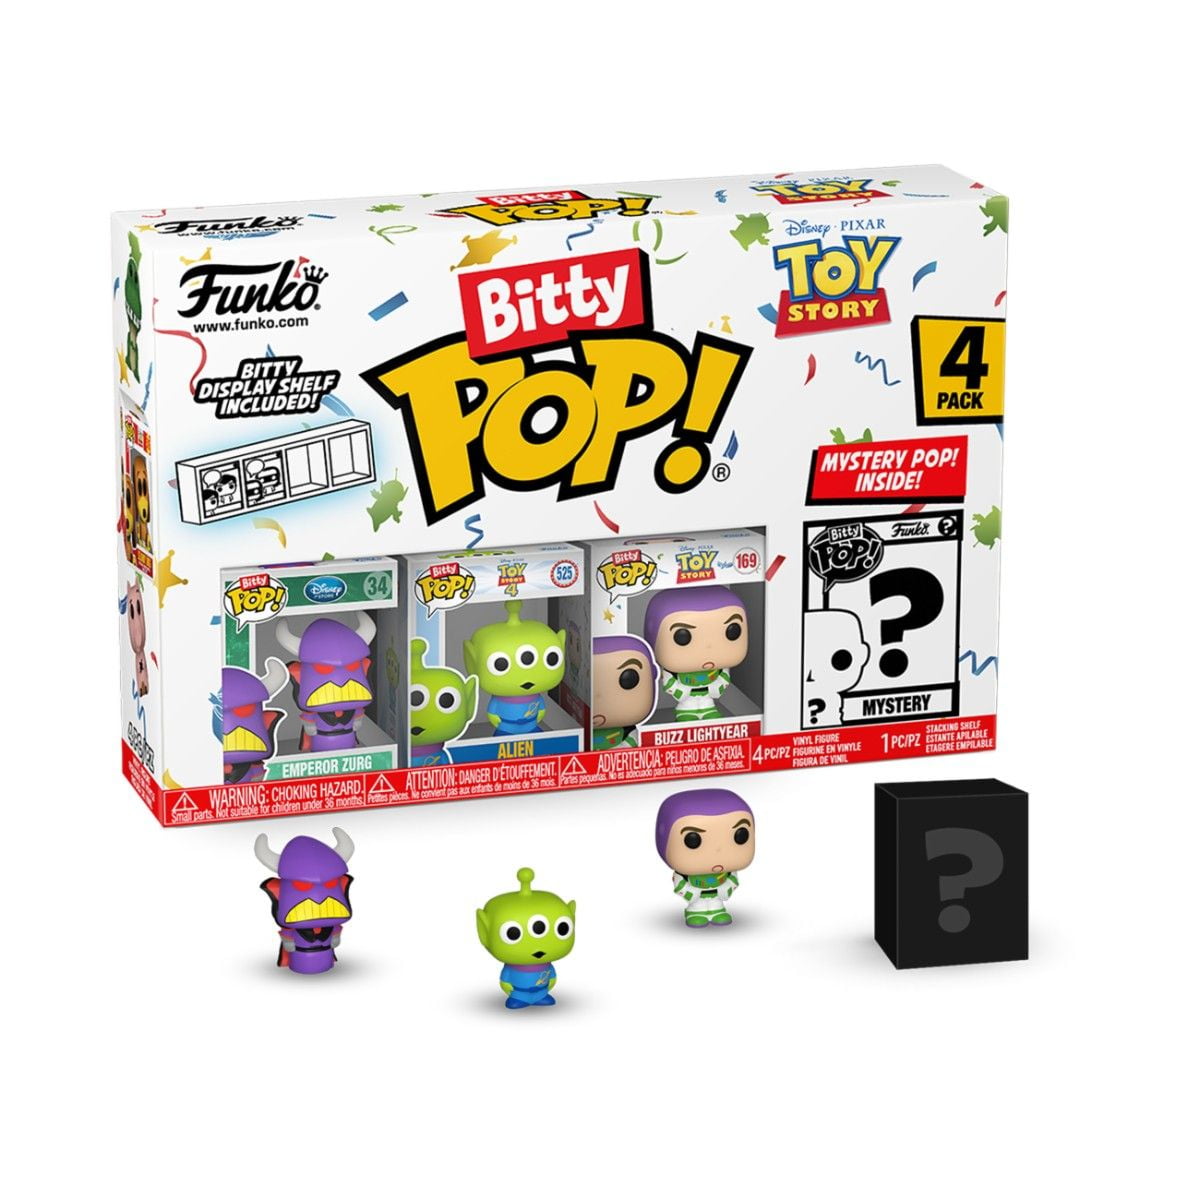 Zurg - Toy Story - Funko Bitty POP! (4 Pack)